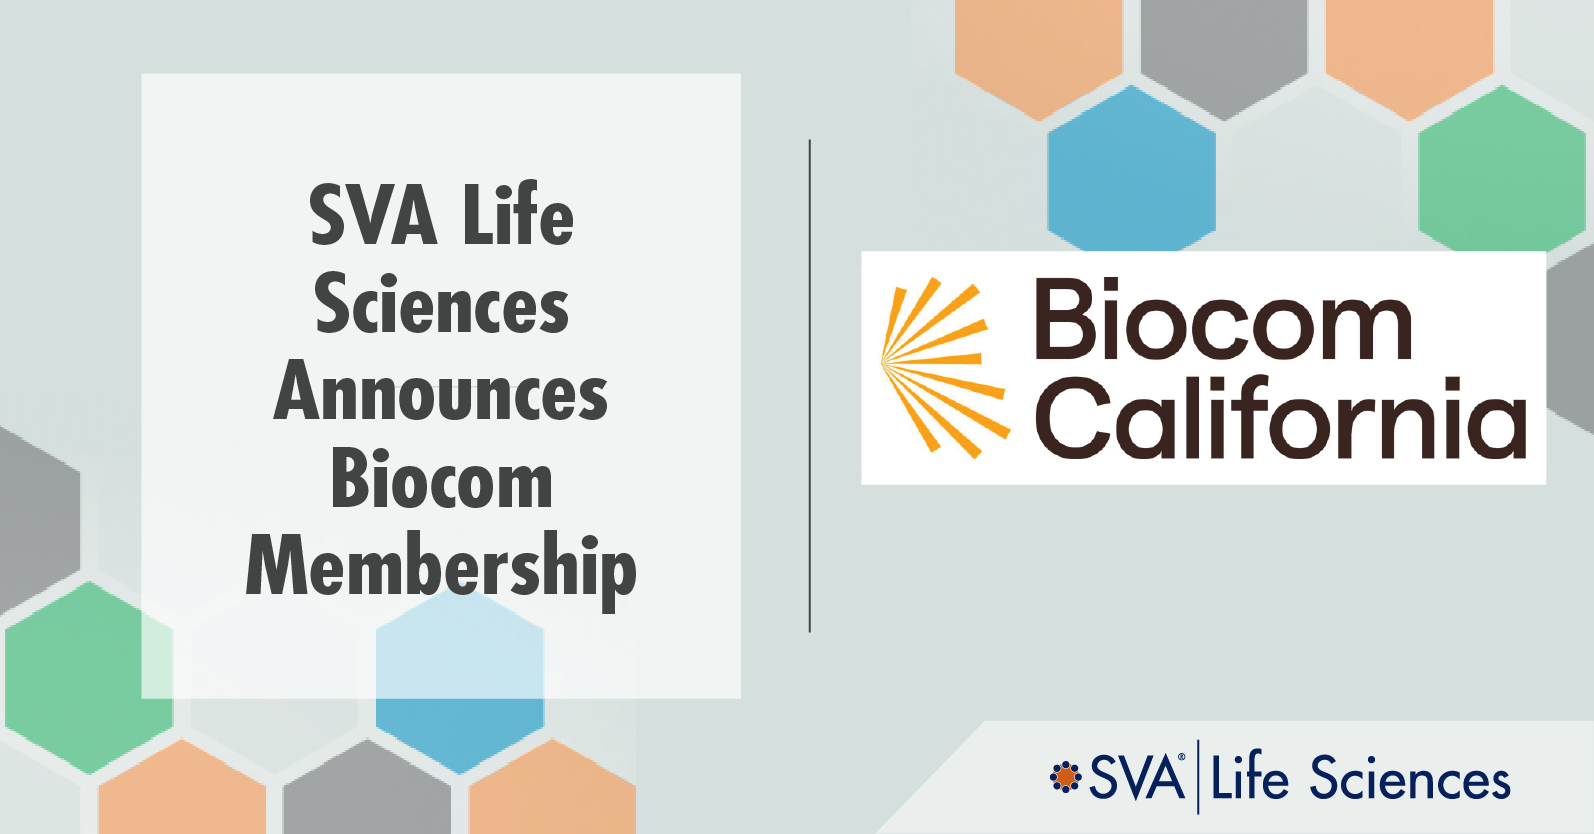 SVA Life Sciences Announces Biocom Membership